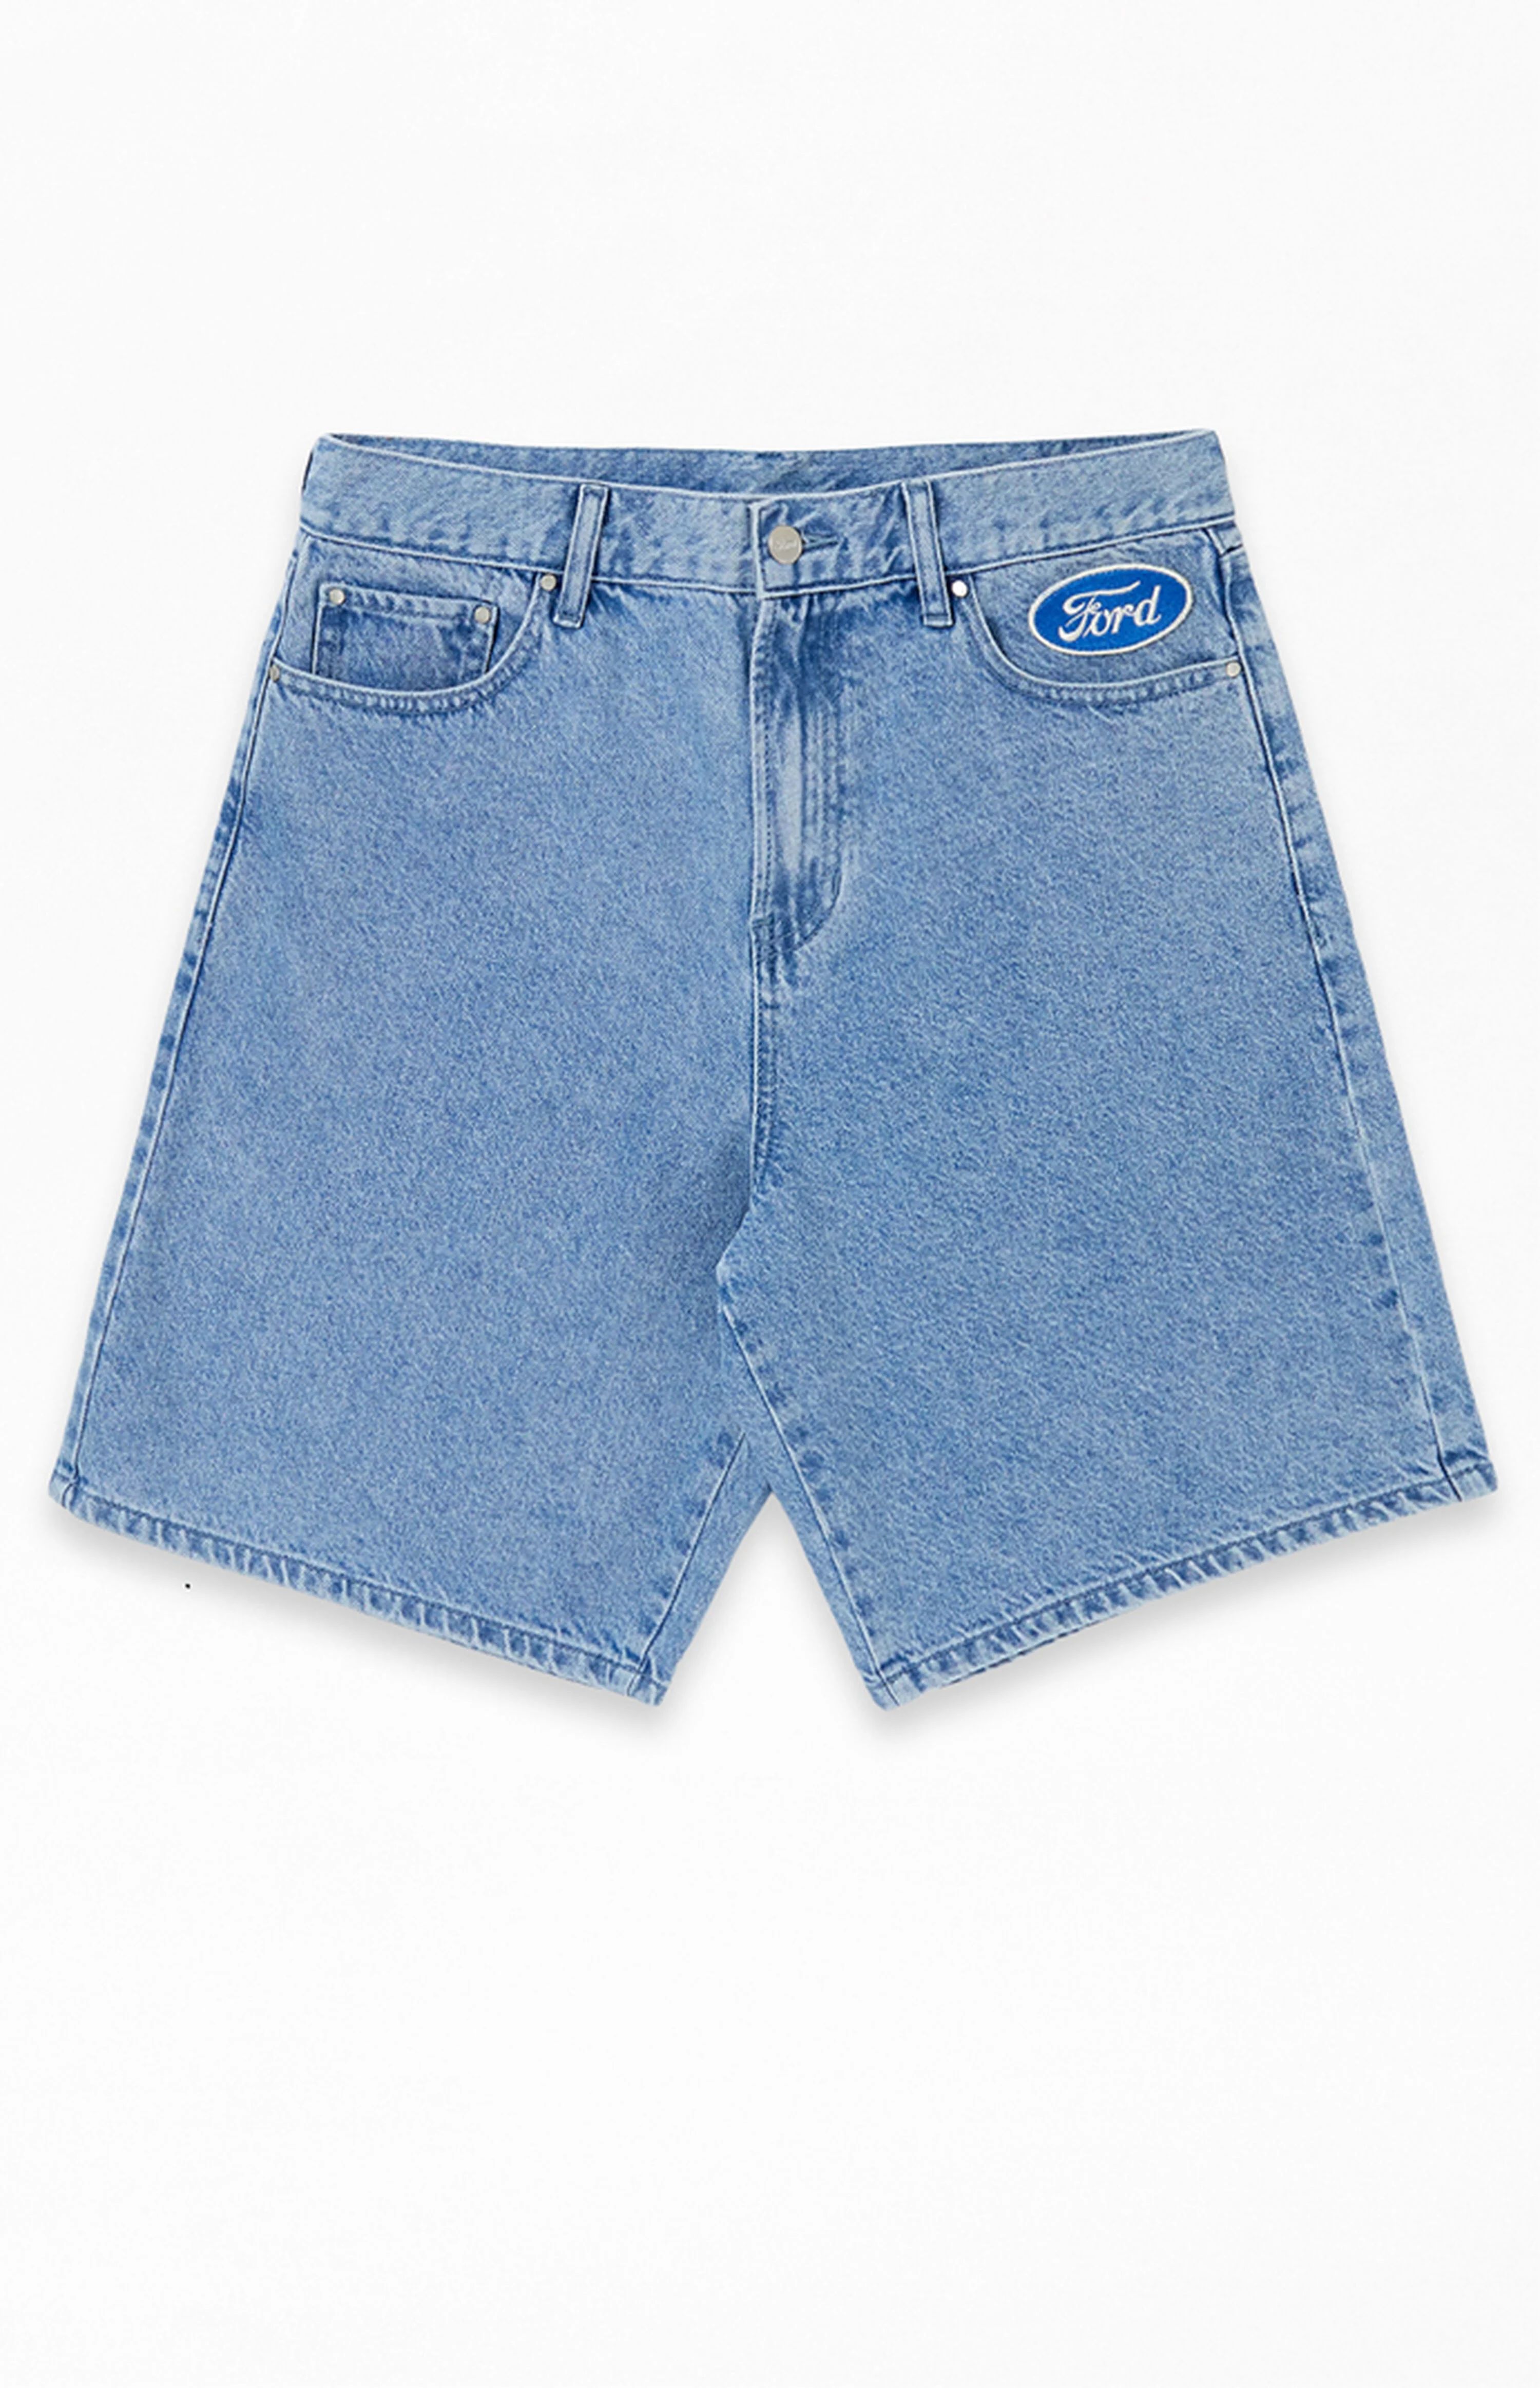 FORD Baggy Denim Shorts | PacSun